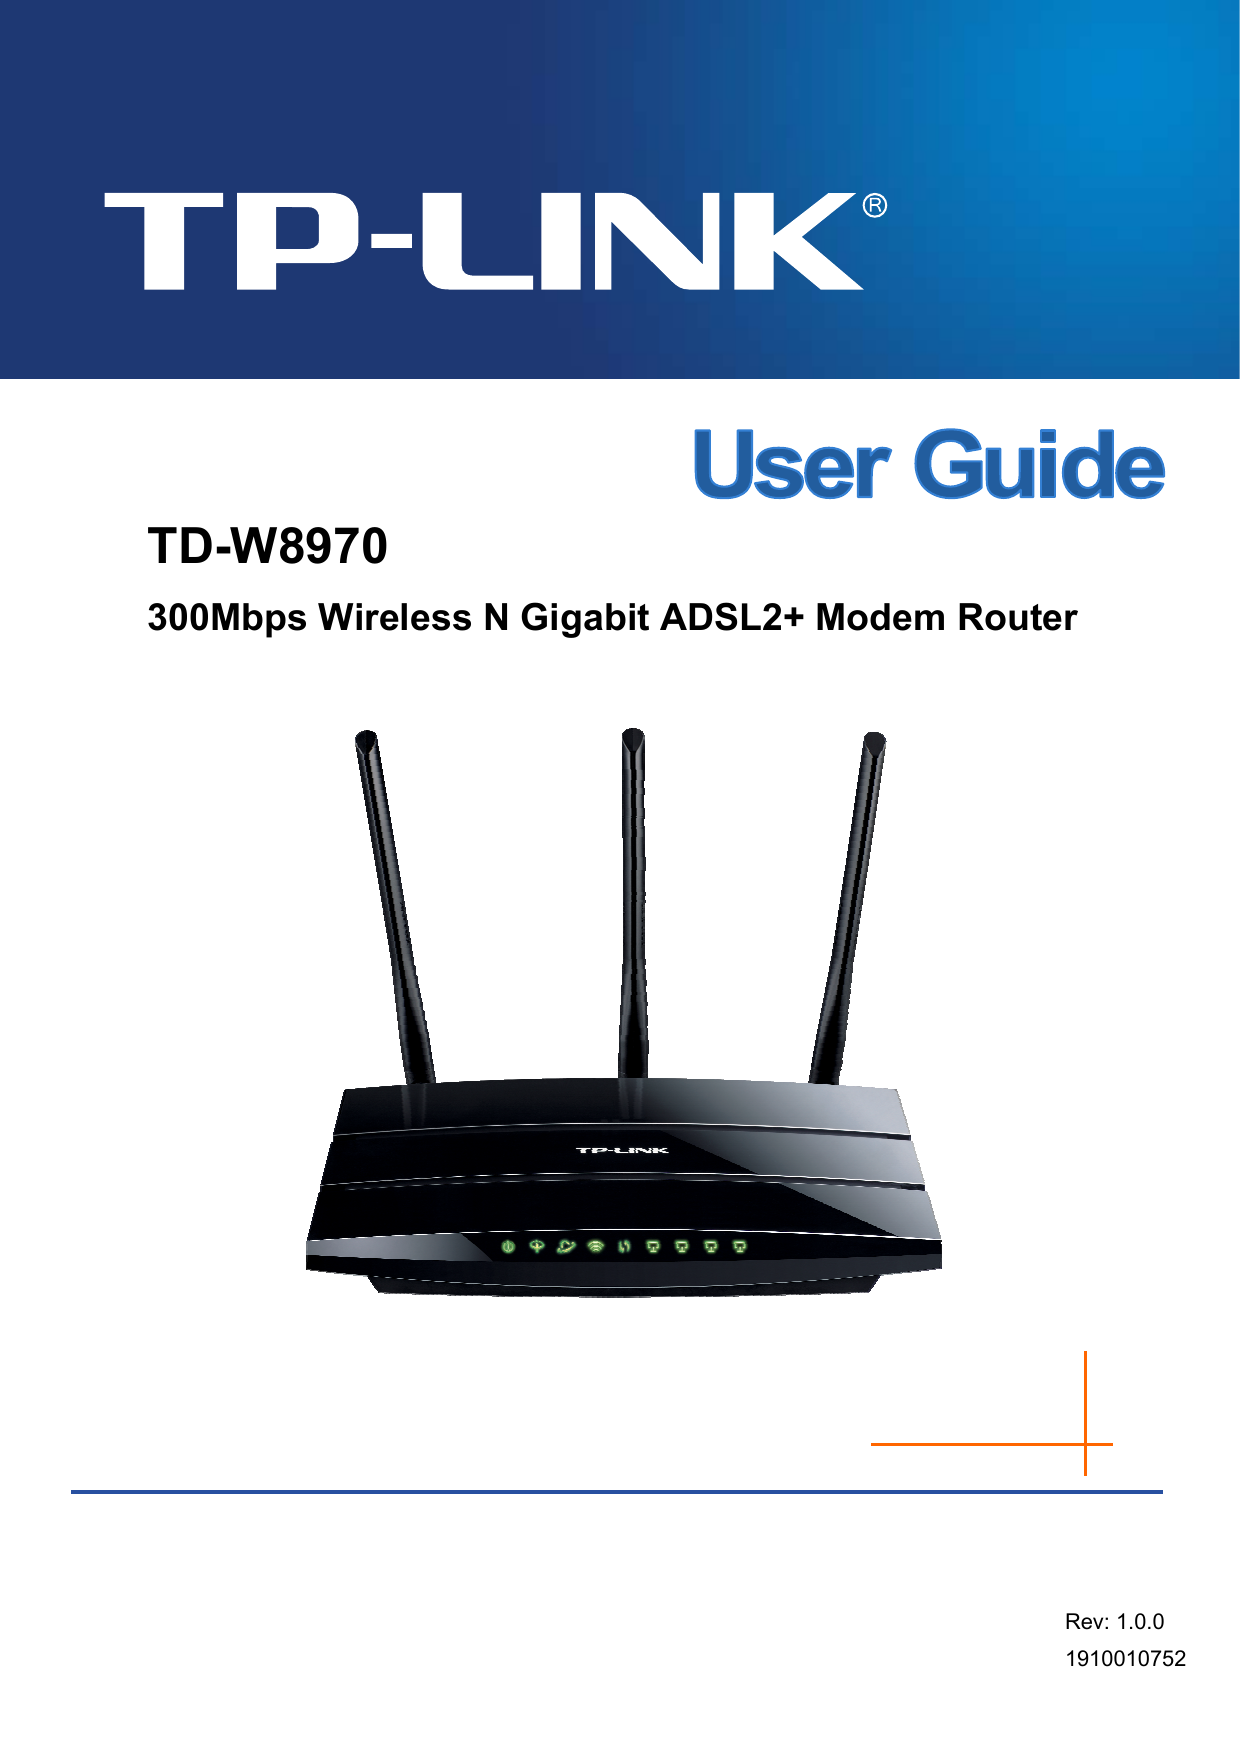    TD-W8970 300Mbps Wireless N Gigabit ADSL2+ Modem Router 1910010752 Rev: 1.0.0 